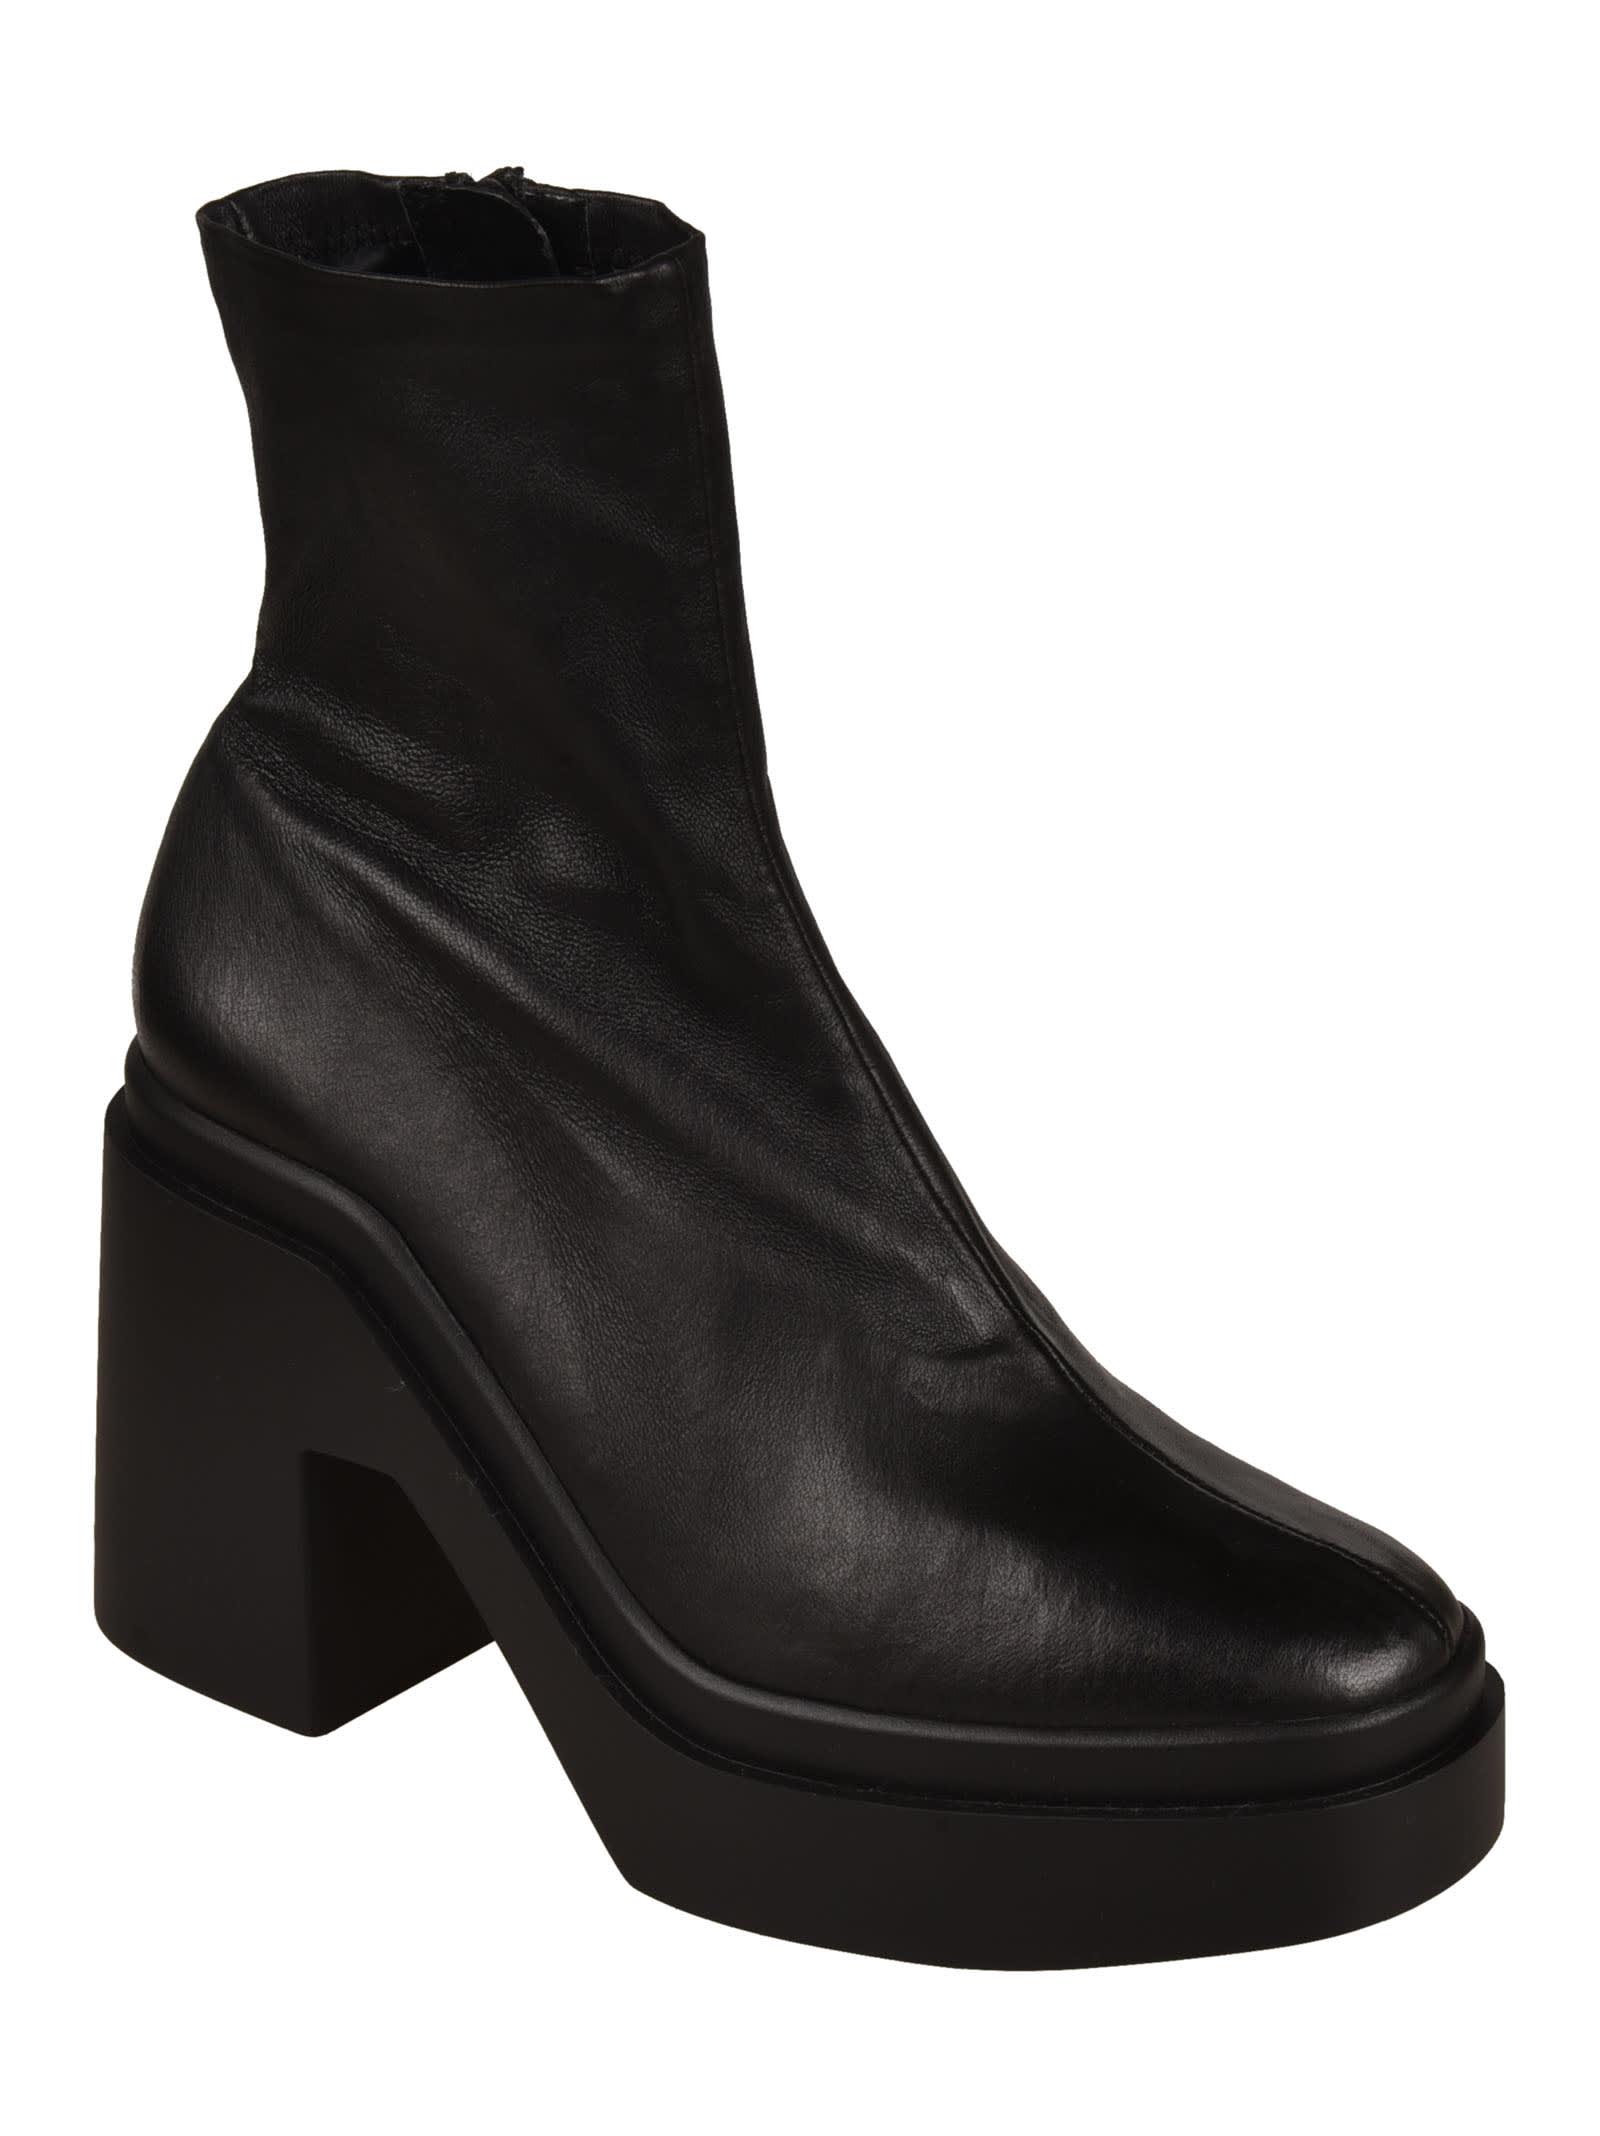 Robert Clergerie Ninaa8 Boots in Black | Lyst